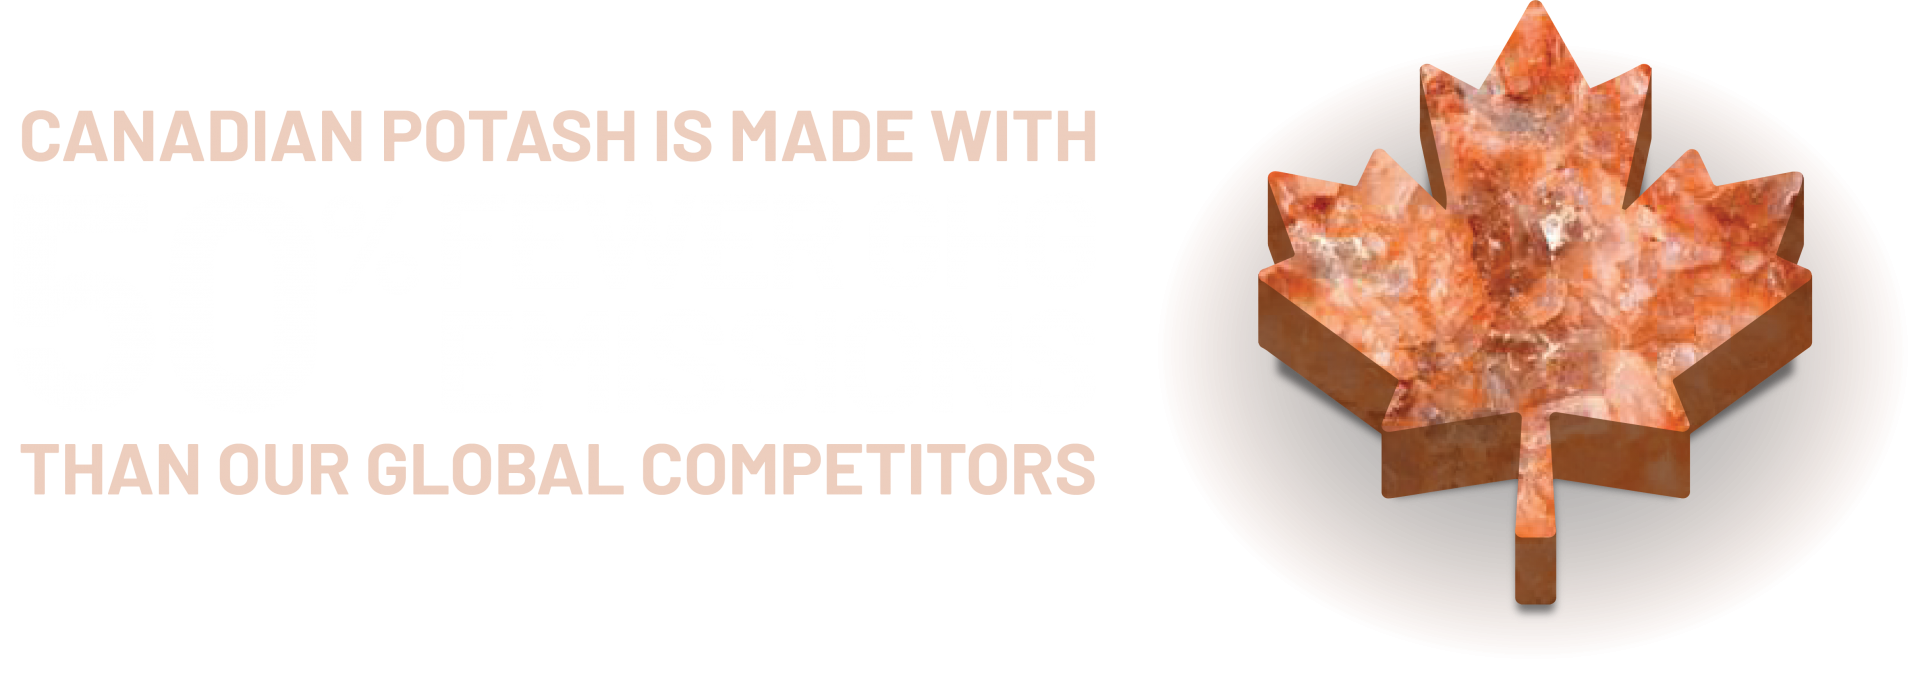 70 fewer ghg emissions